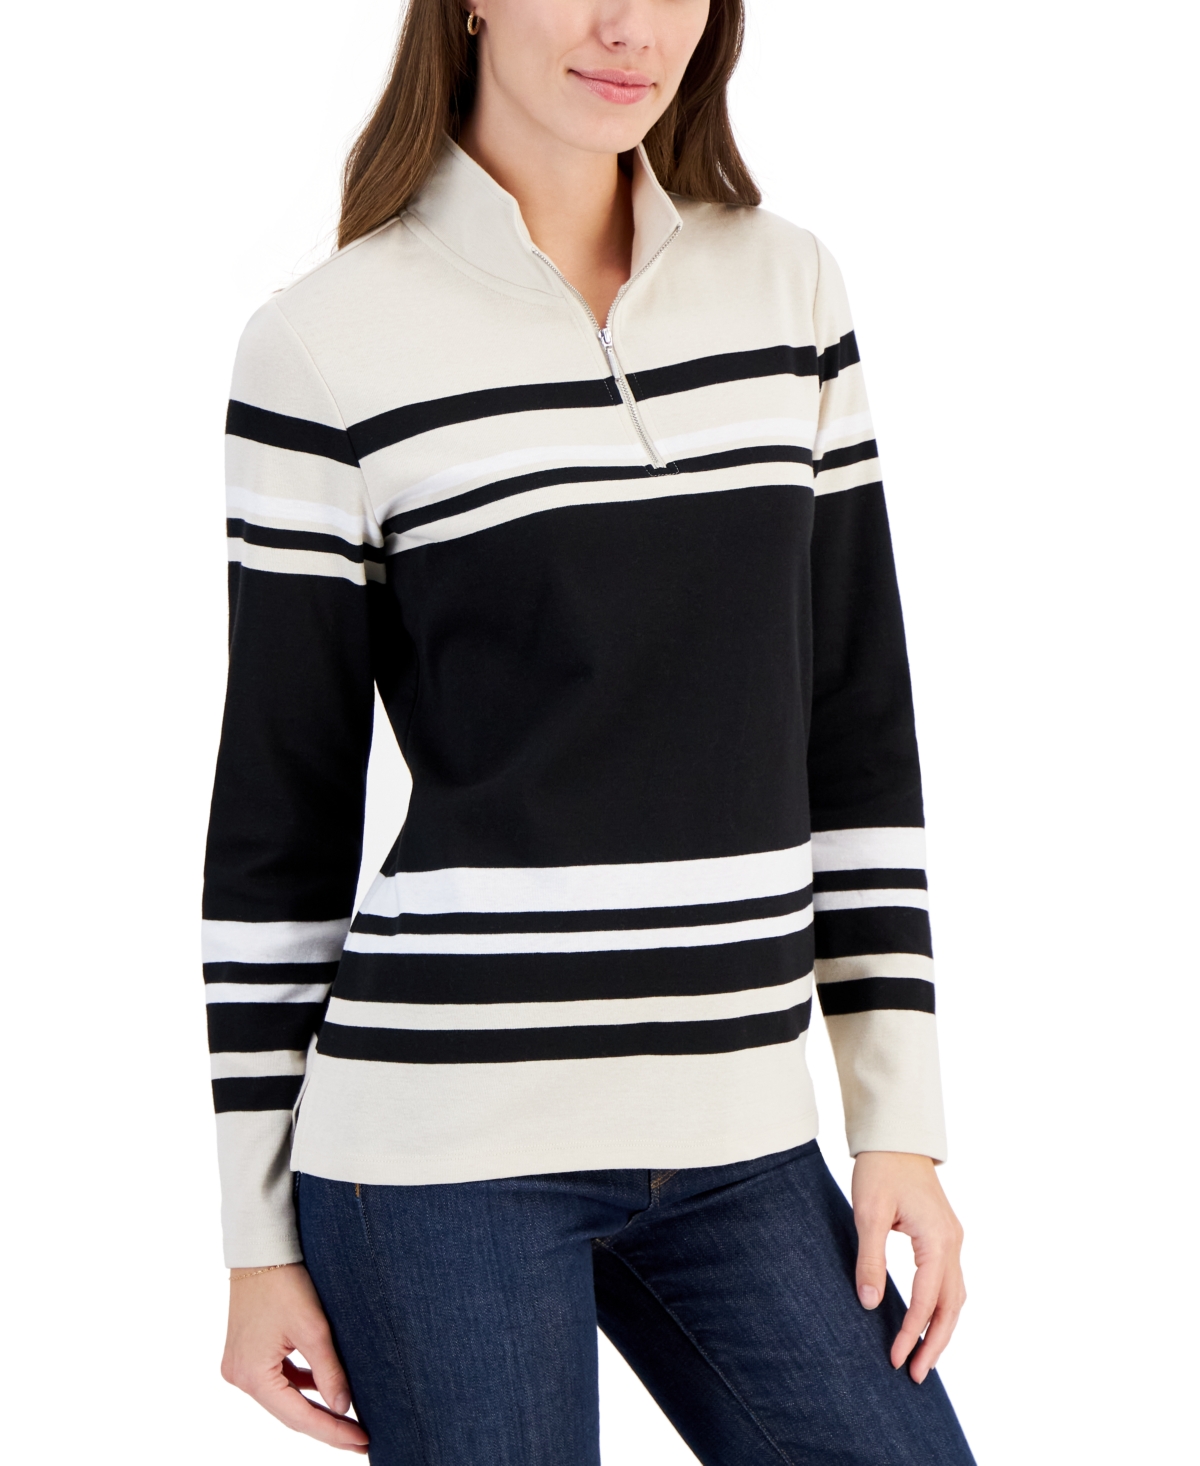 Women's 1/4-Zip Pullover Top, Created for Macy's - Pebble